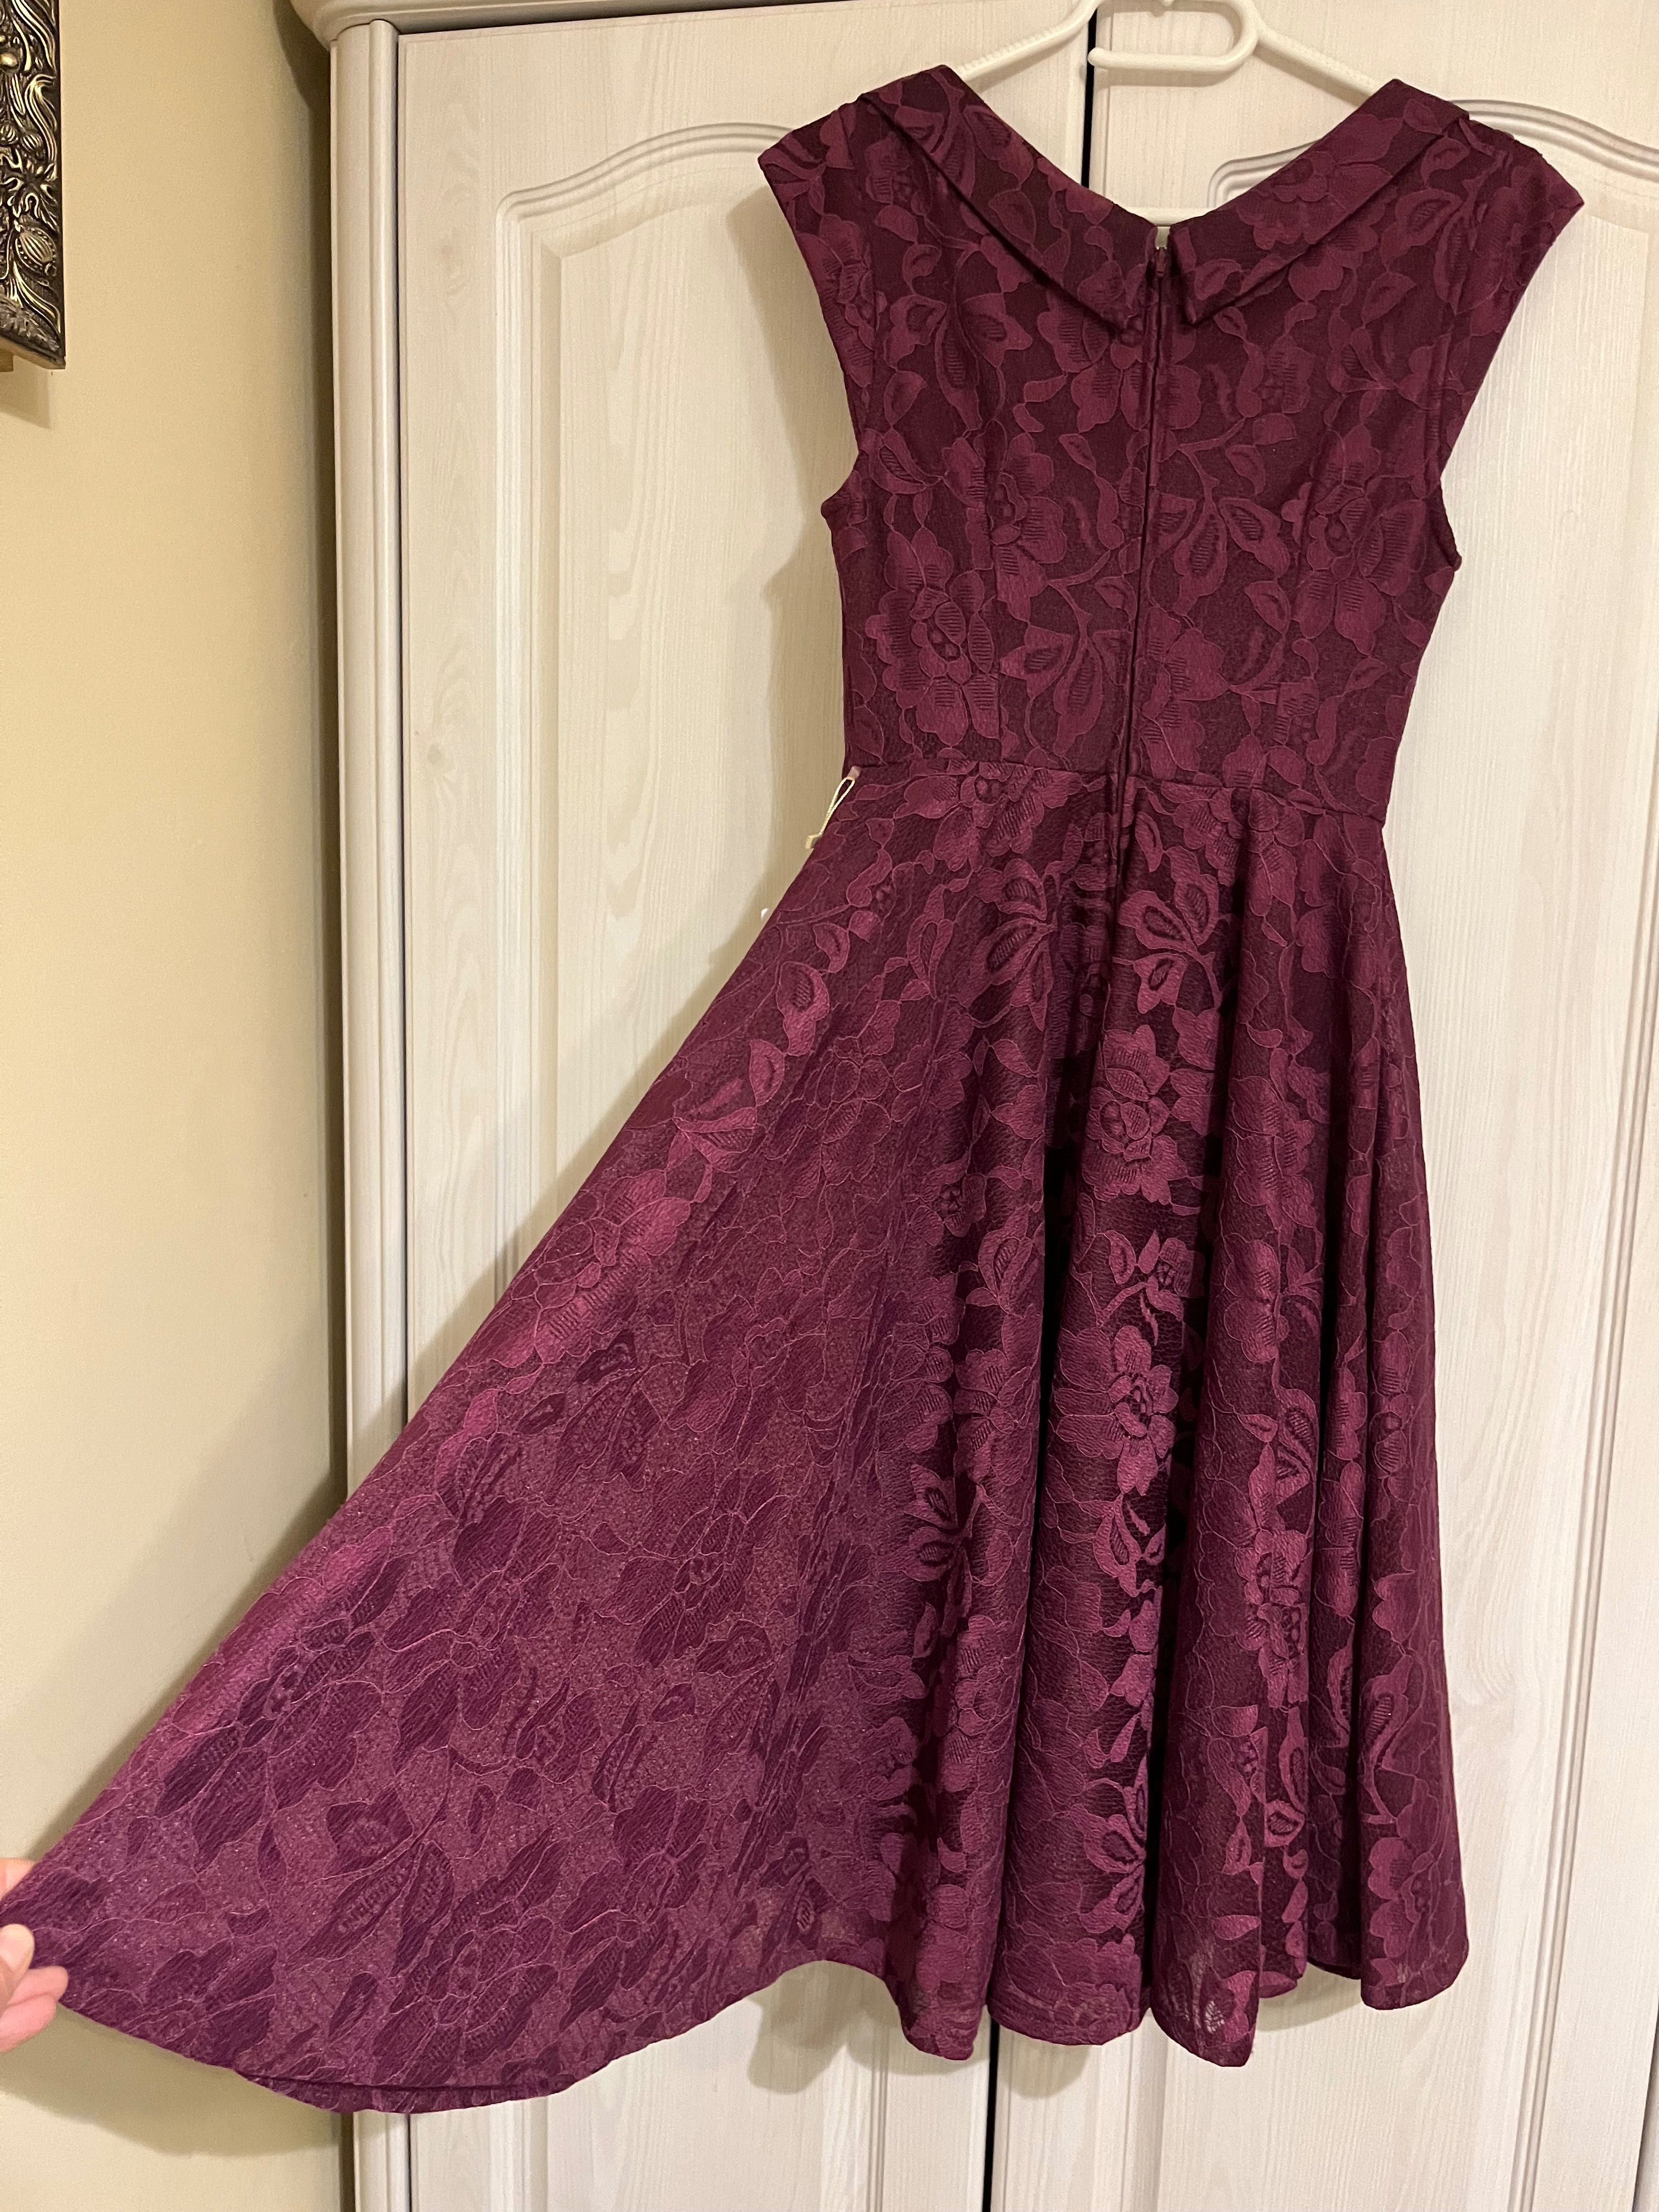 Piękna koronkowa fioletowa sukienka Jolie Moi 34 XS nowa balowa